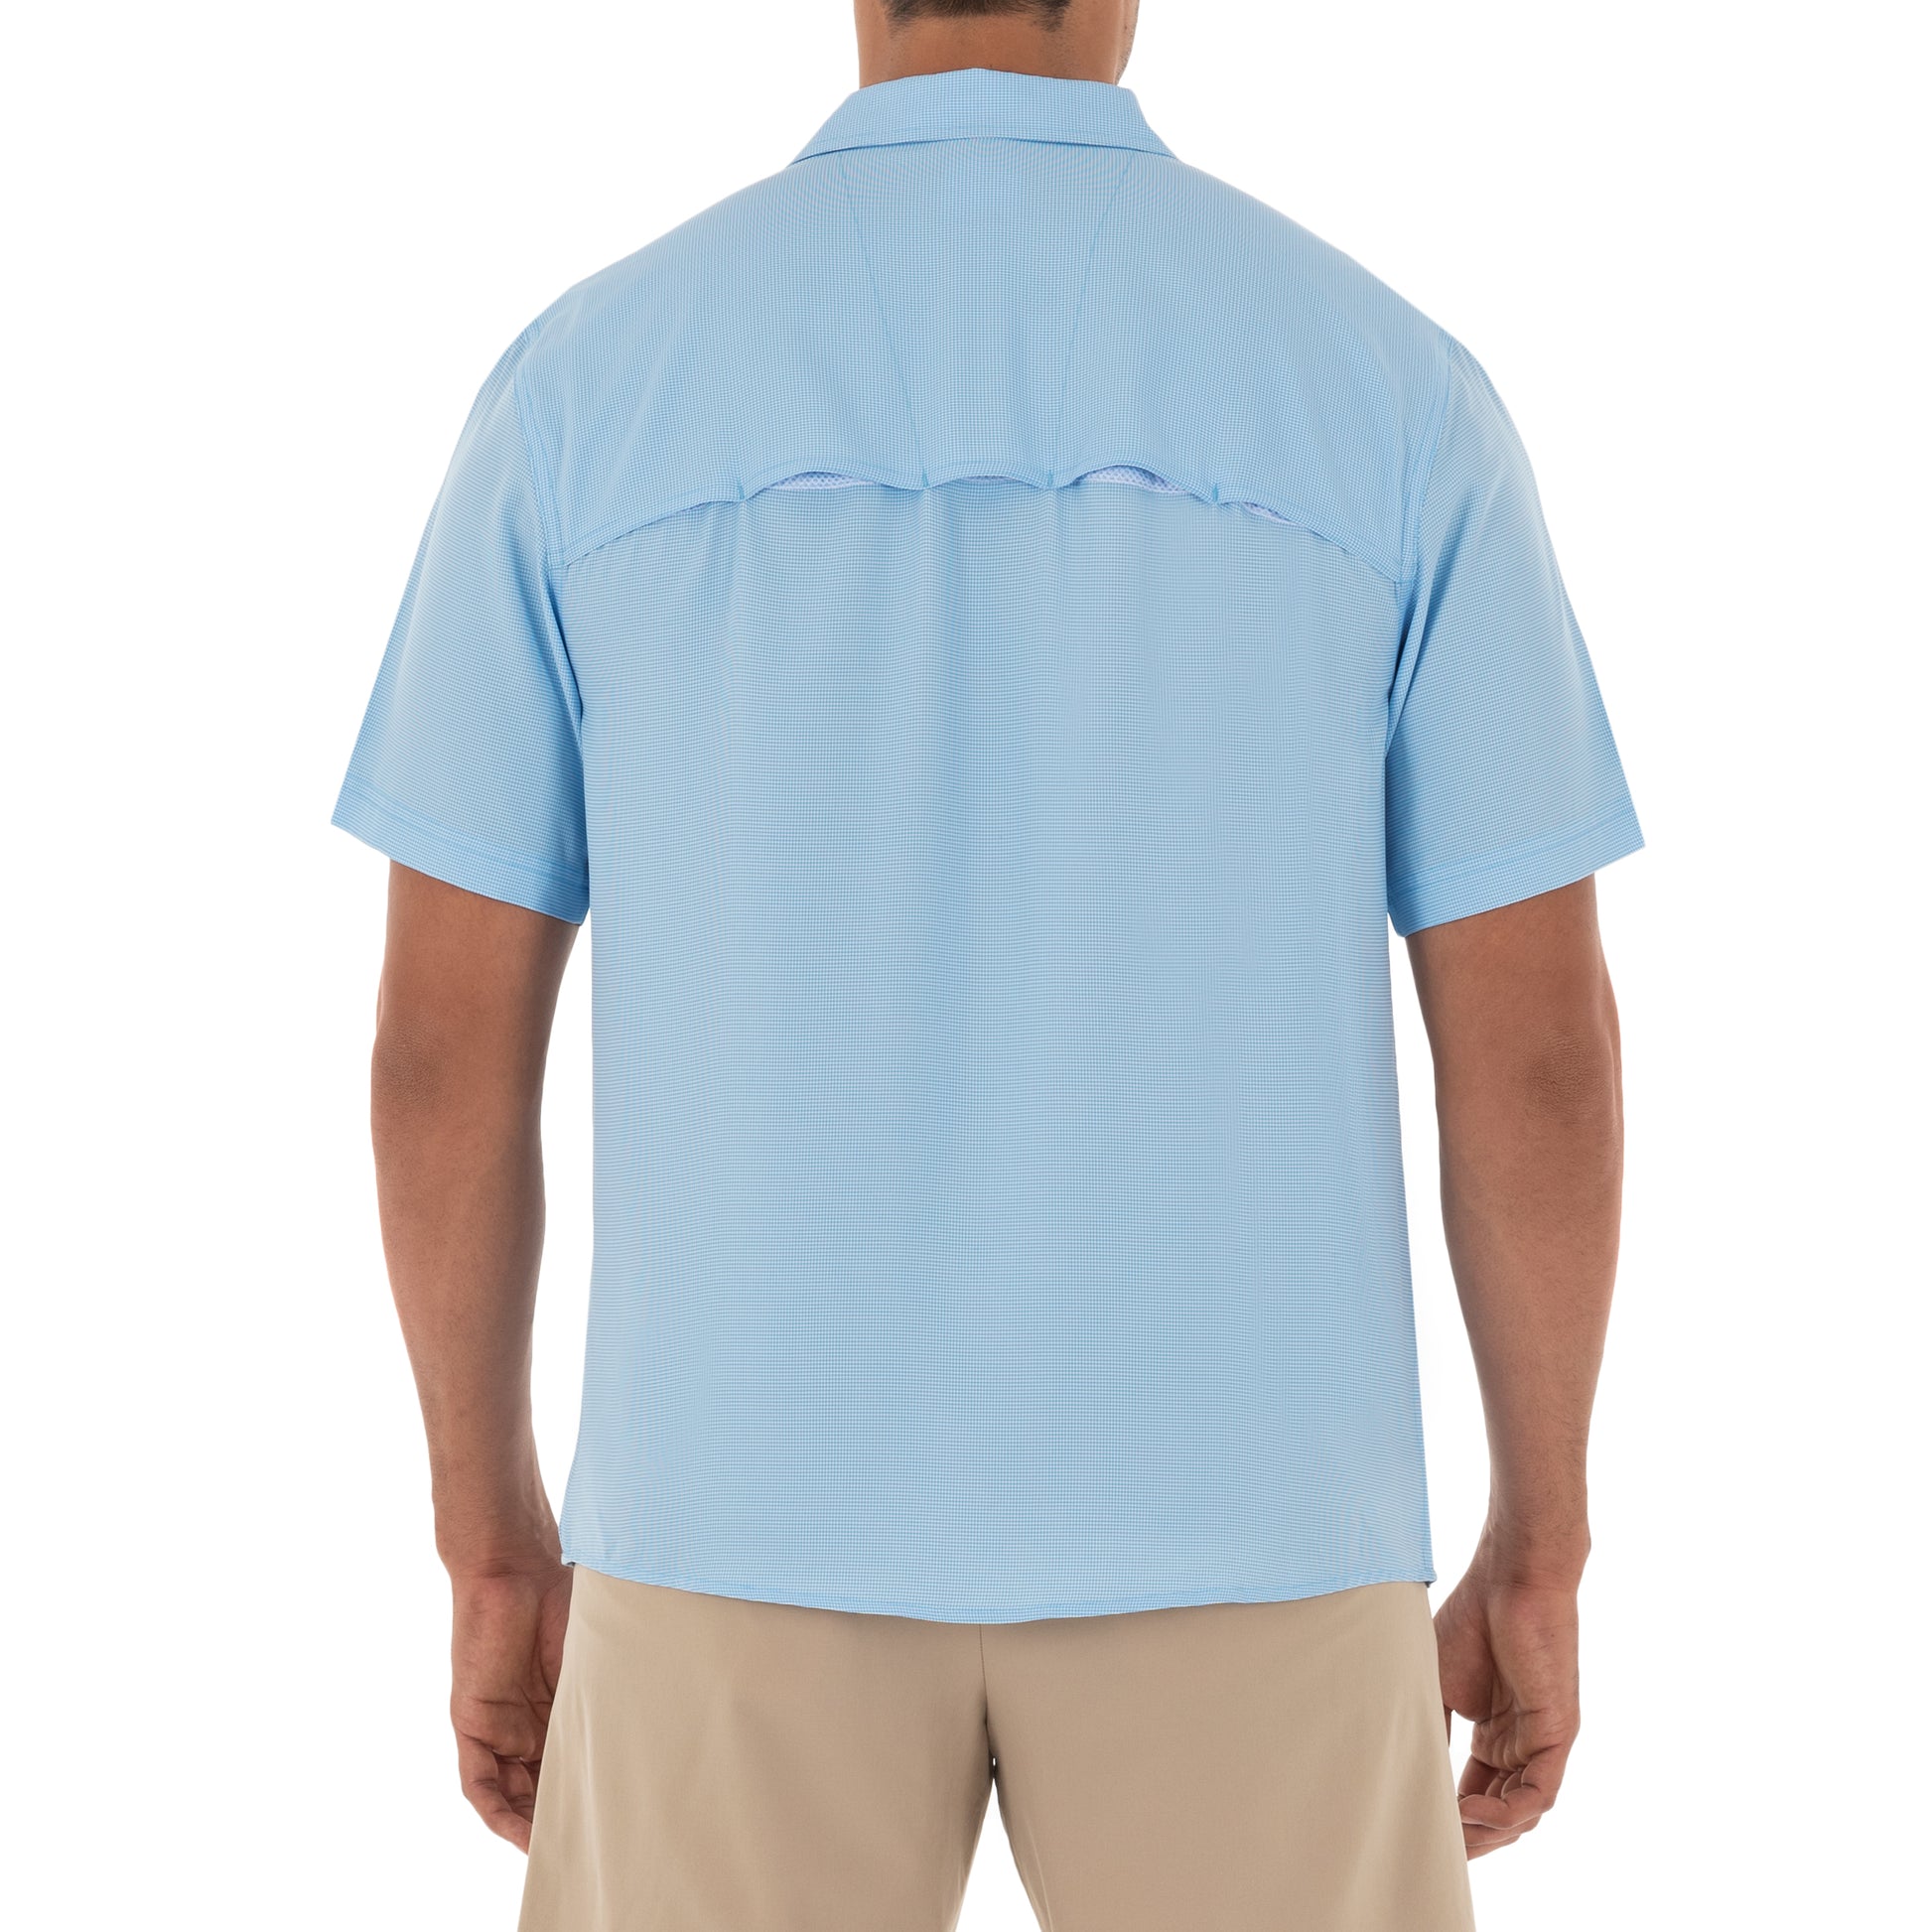 Men's Short Sleeve Texture Gingham Blue Performance Fishing Shirt View 4